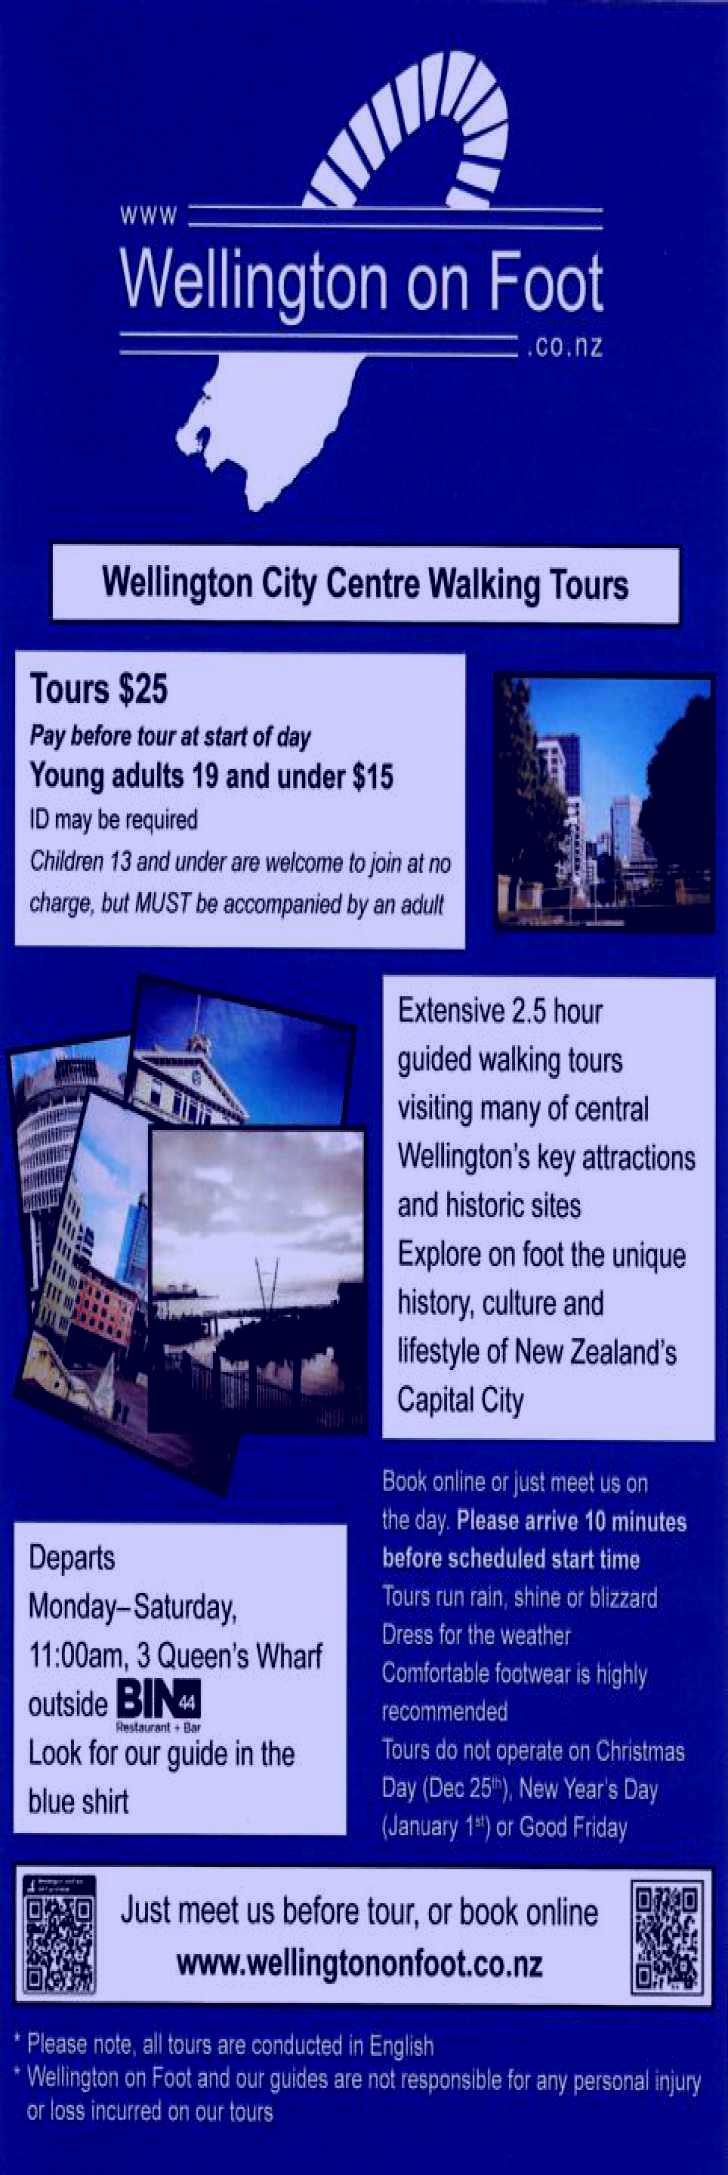 SubjectCoach | Wellington City Walking Tour Image 1